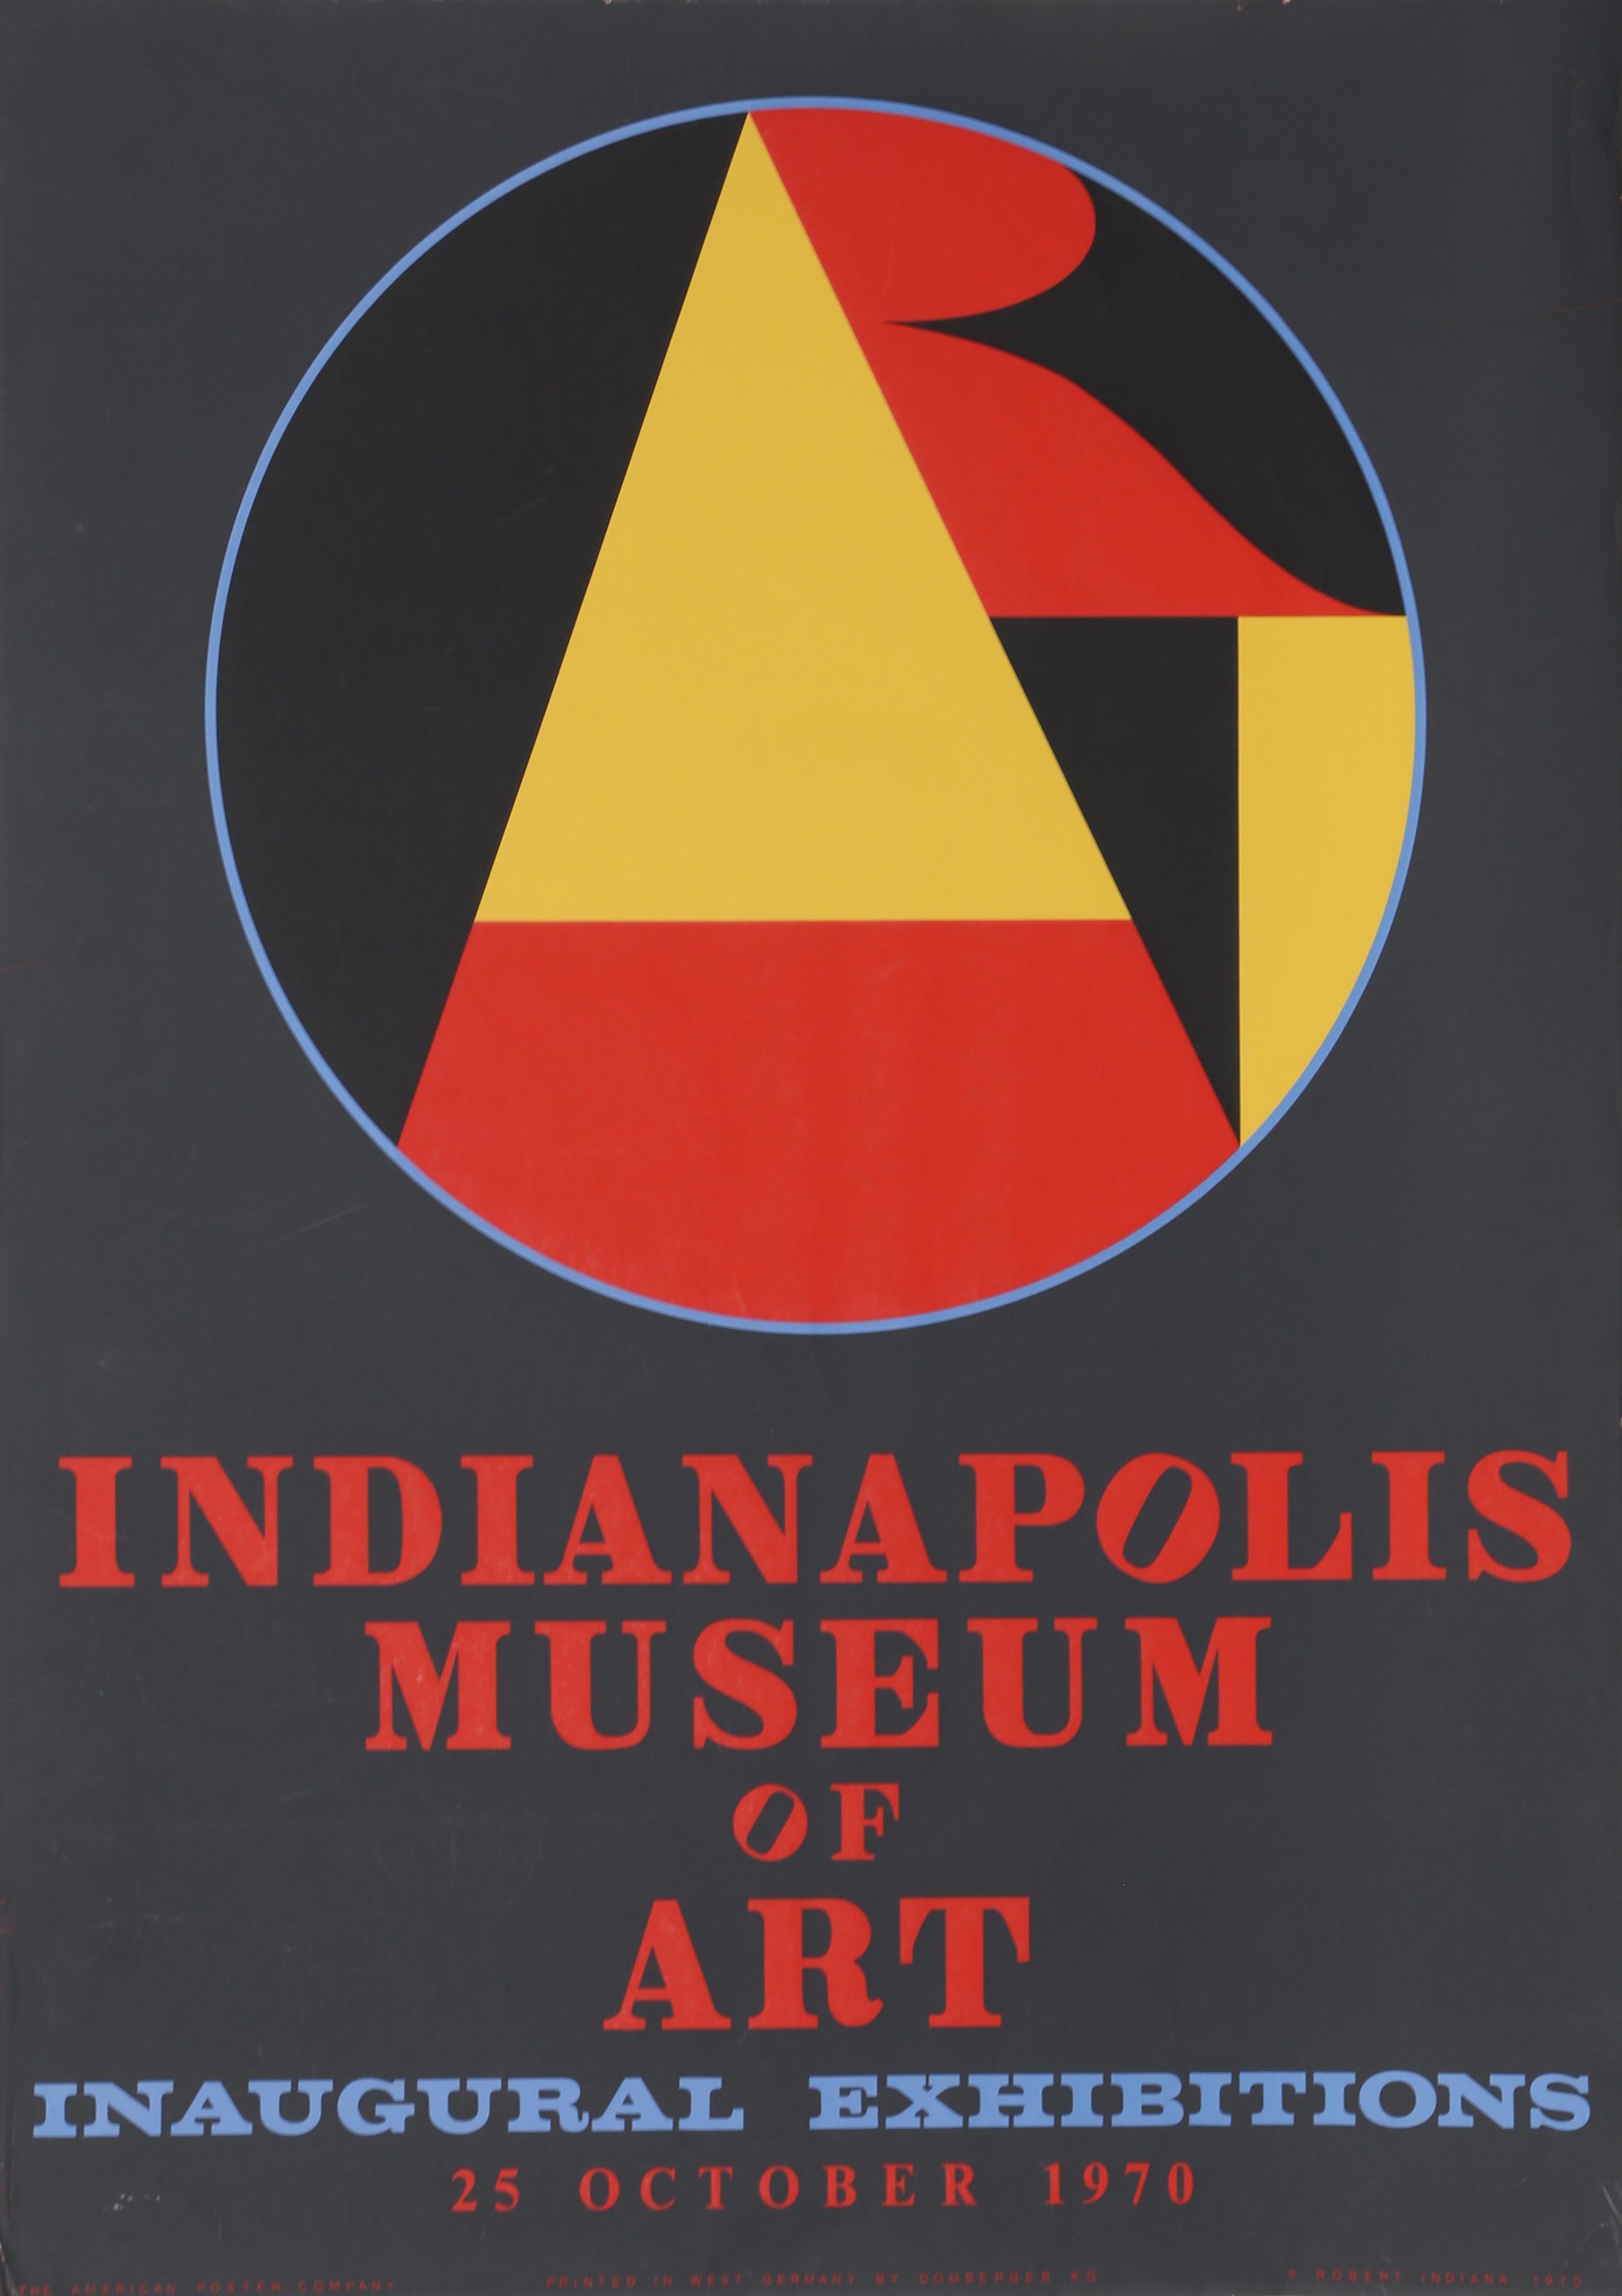 Artist: Robert Indiana, American (1928 - 2018)
Title: Indianapolis Museum of Art
Year: 1970
Medium: Silkscreen Poster
Size: 35 x 25 in. (88.9 x 63.5 cm)